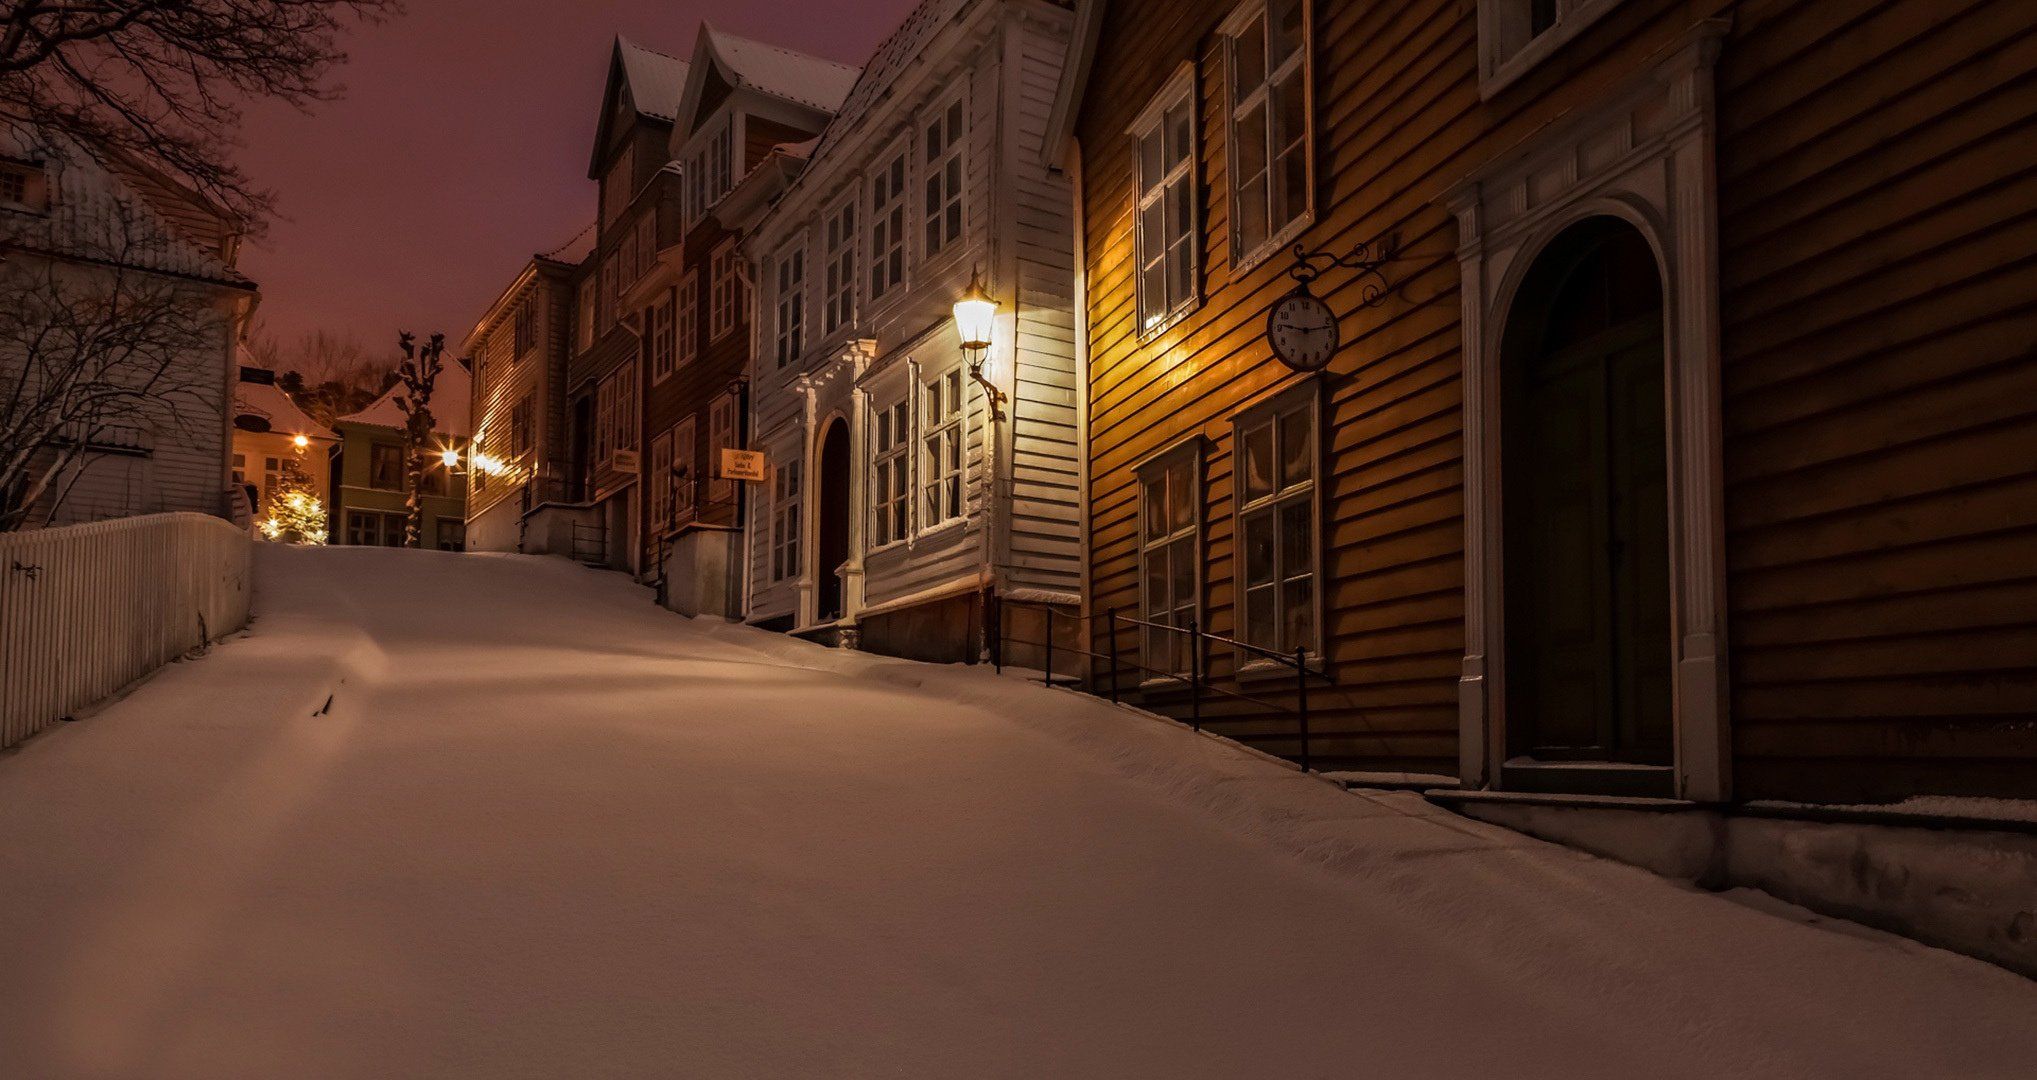 Gamlebergen norway norway night winter snow roads houses clocks lights city light lighting wallpaperx1080